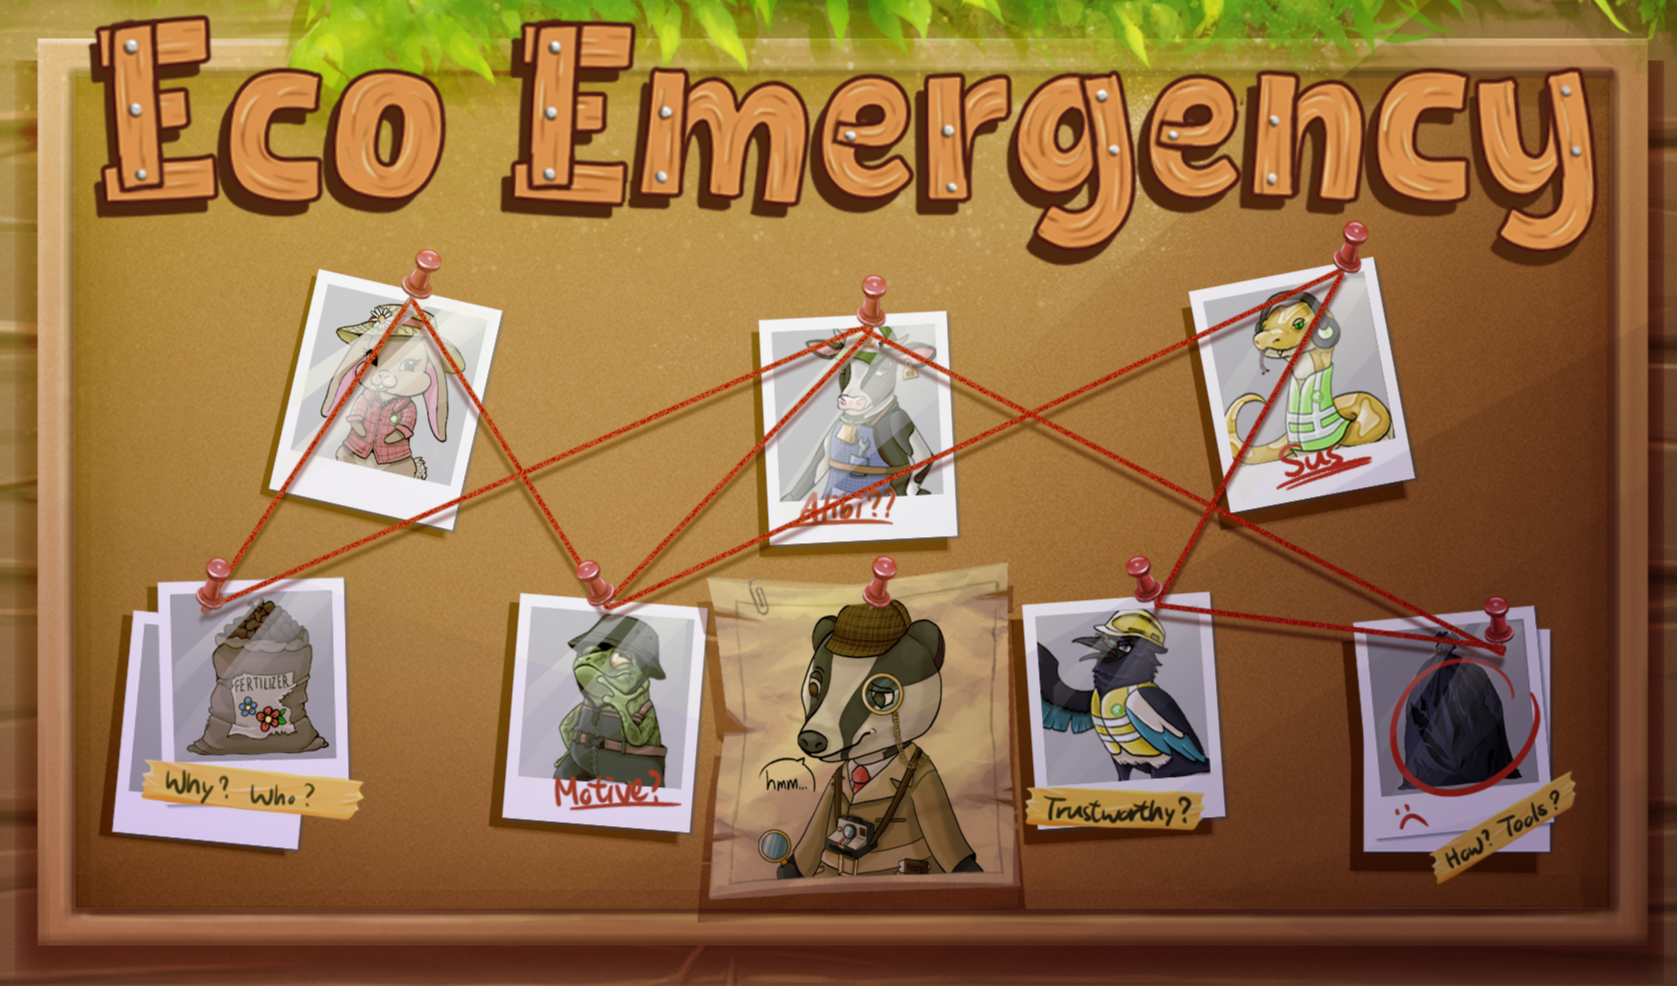 The Eco Emergency